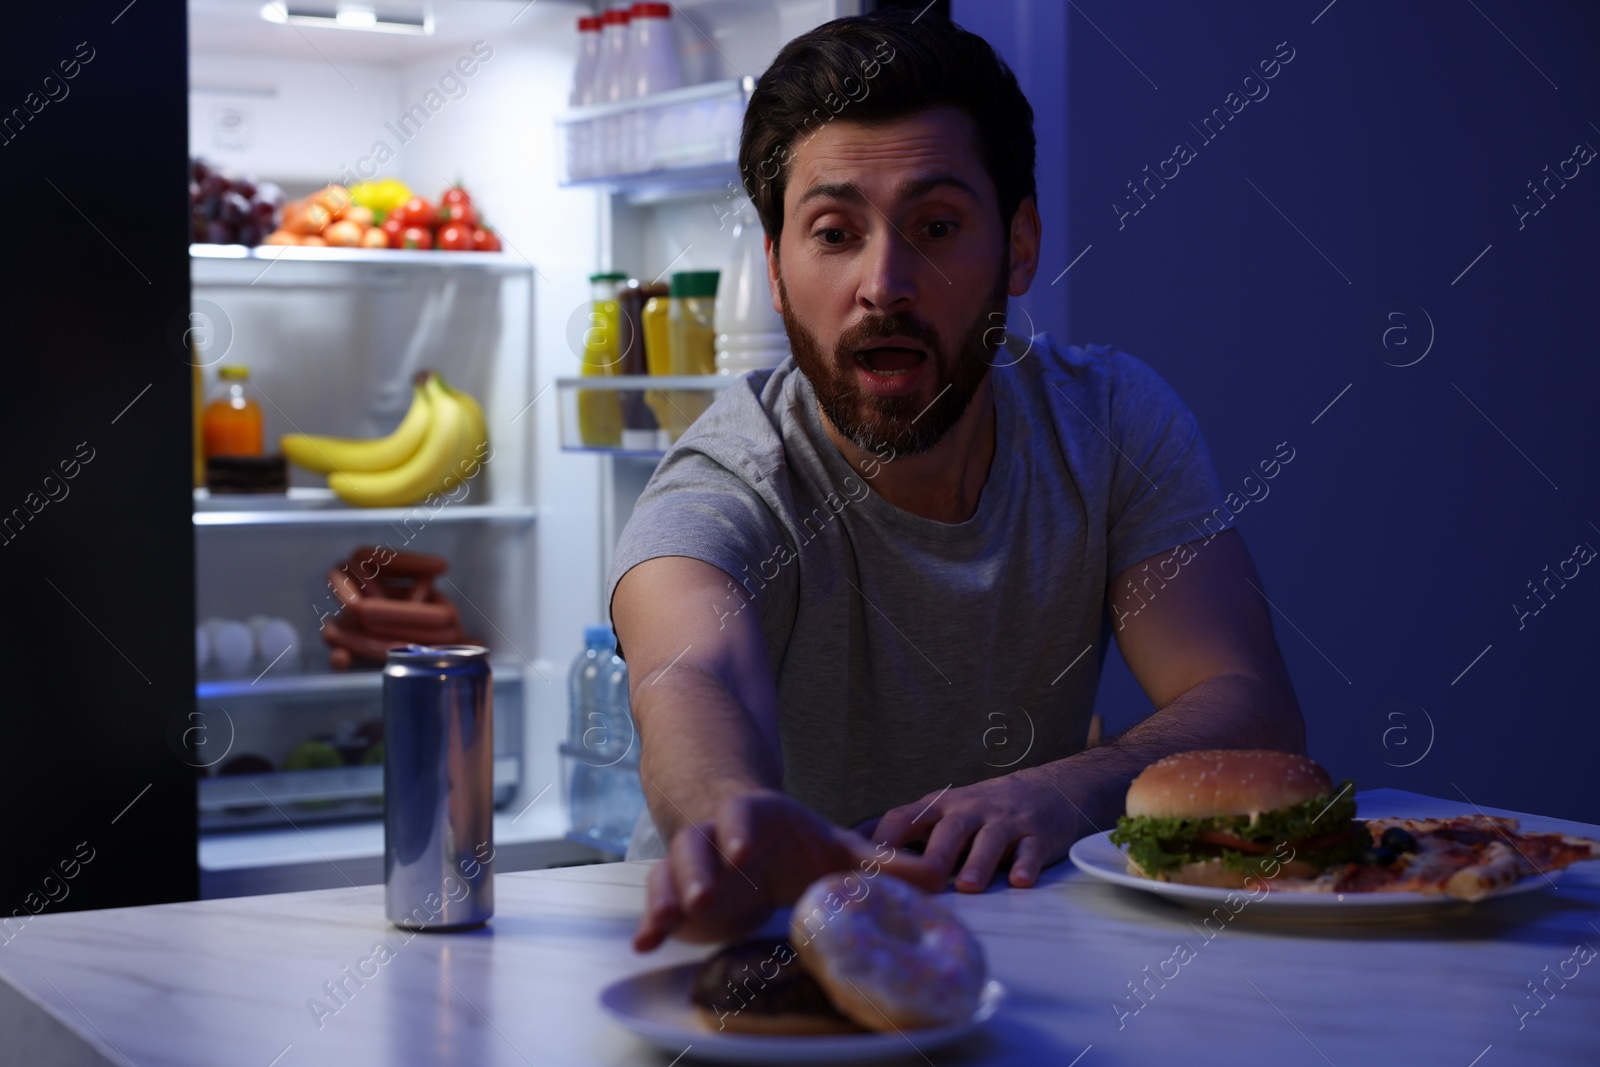 Photo of Man taking donut in kitchen at night. Bad habit